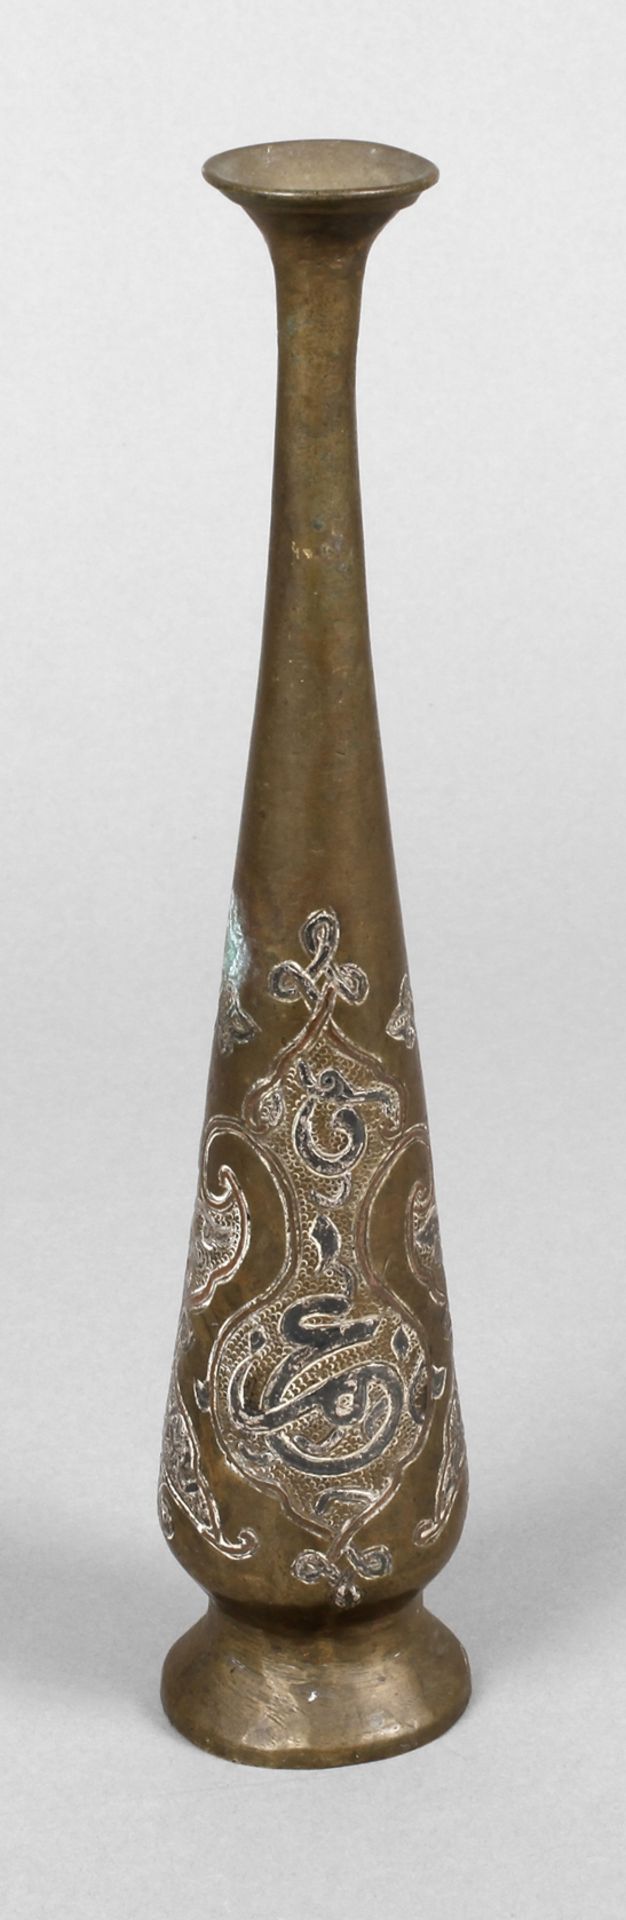 Persische Ziervase Anfang 20. Jh., Messing gegossen, teils bronziert bzw. versilbert, schlanker,